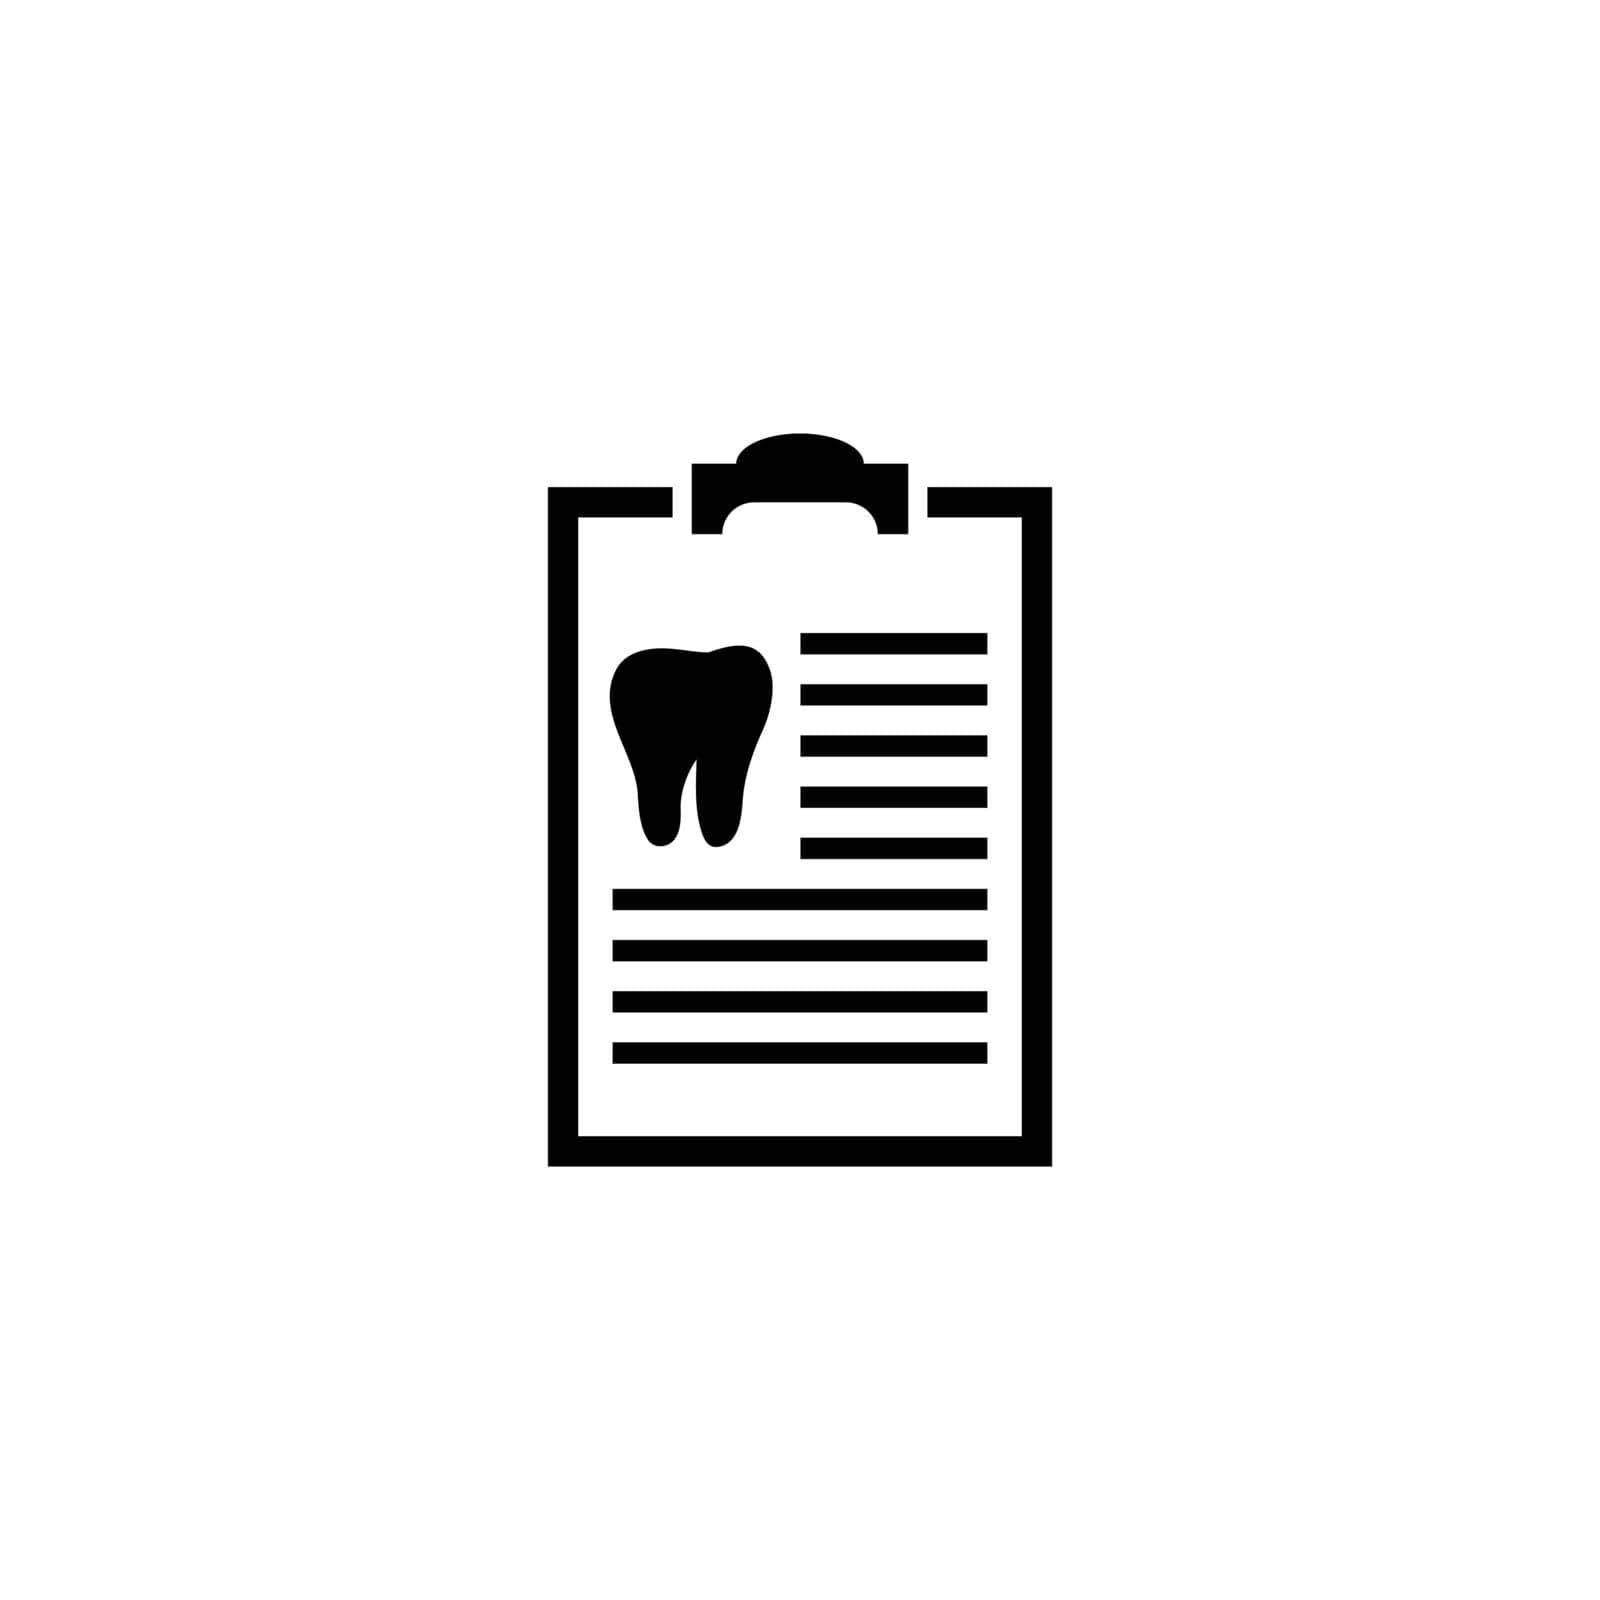 Docs Dental Checklist, Teeth Diagnostic Report Flat Vector Icon by sfinks